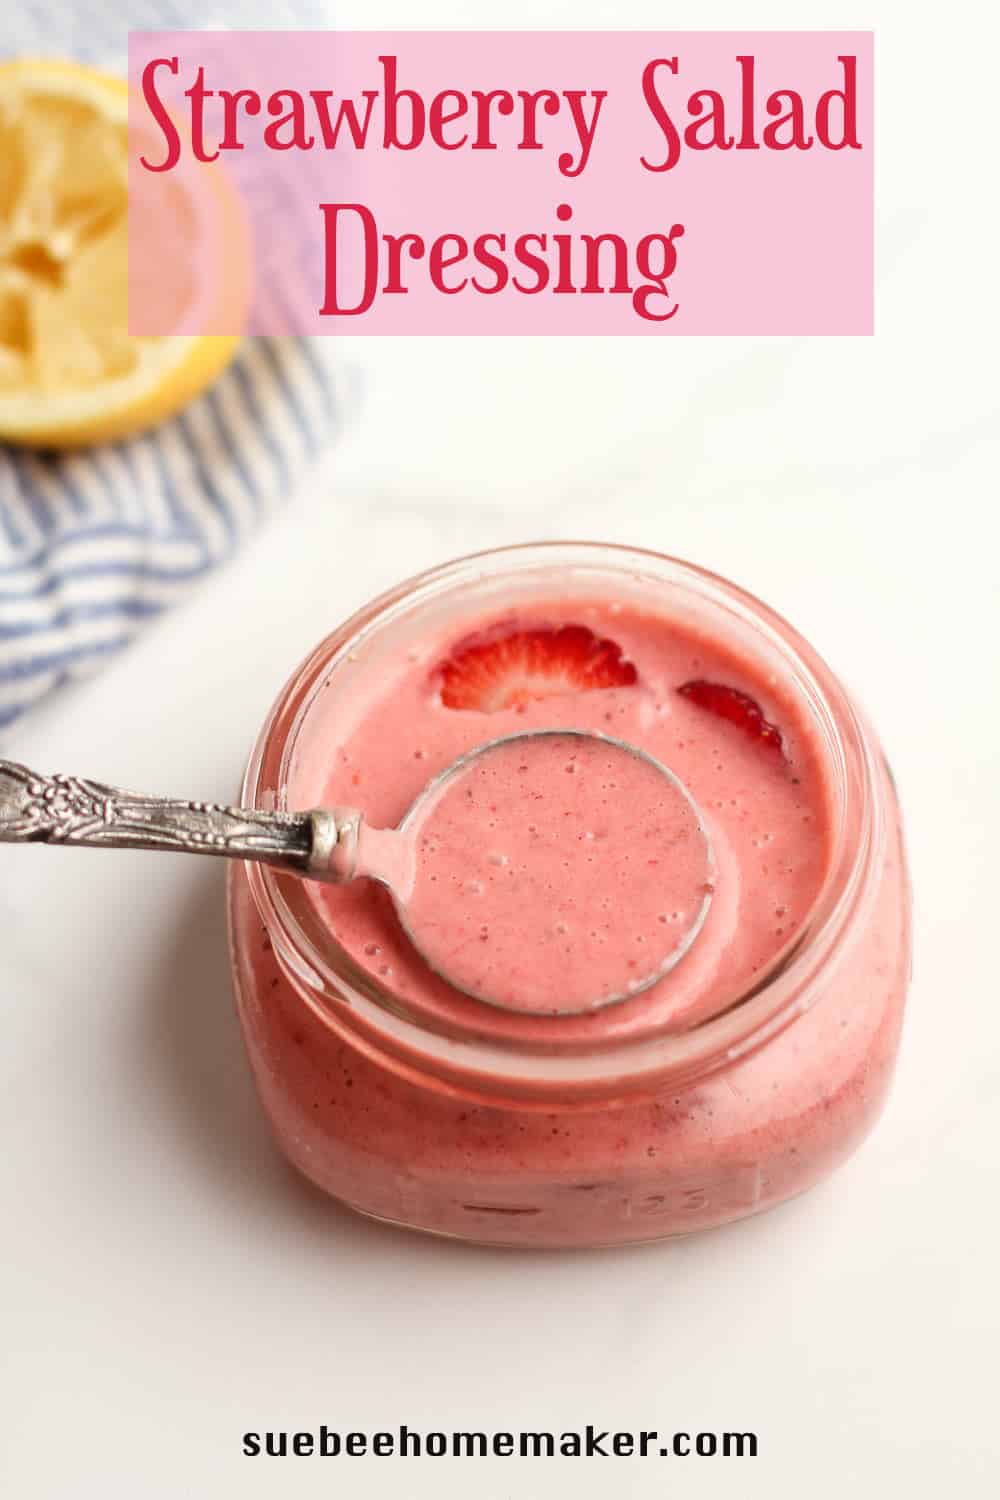 A jar of strawberry salad dressing.